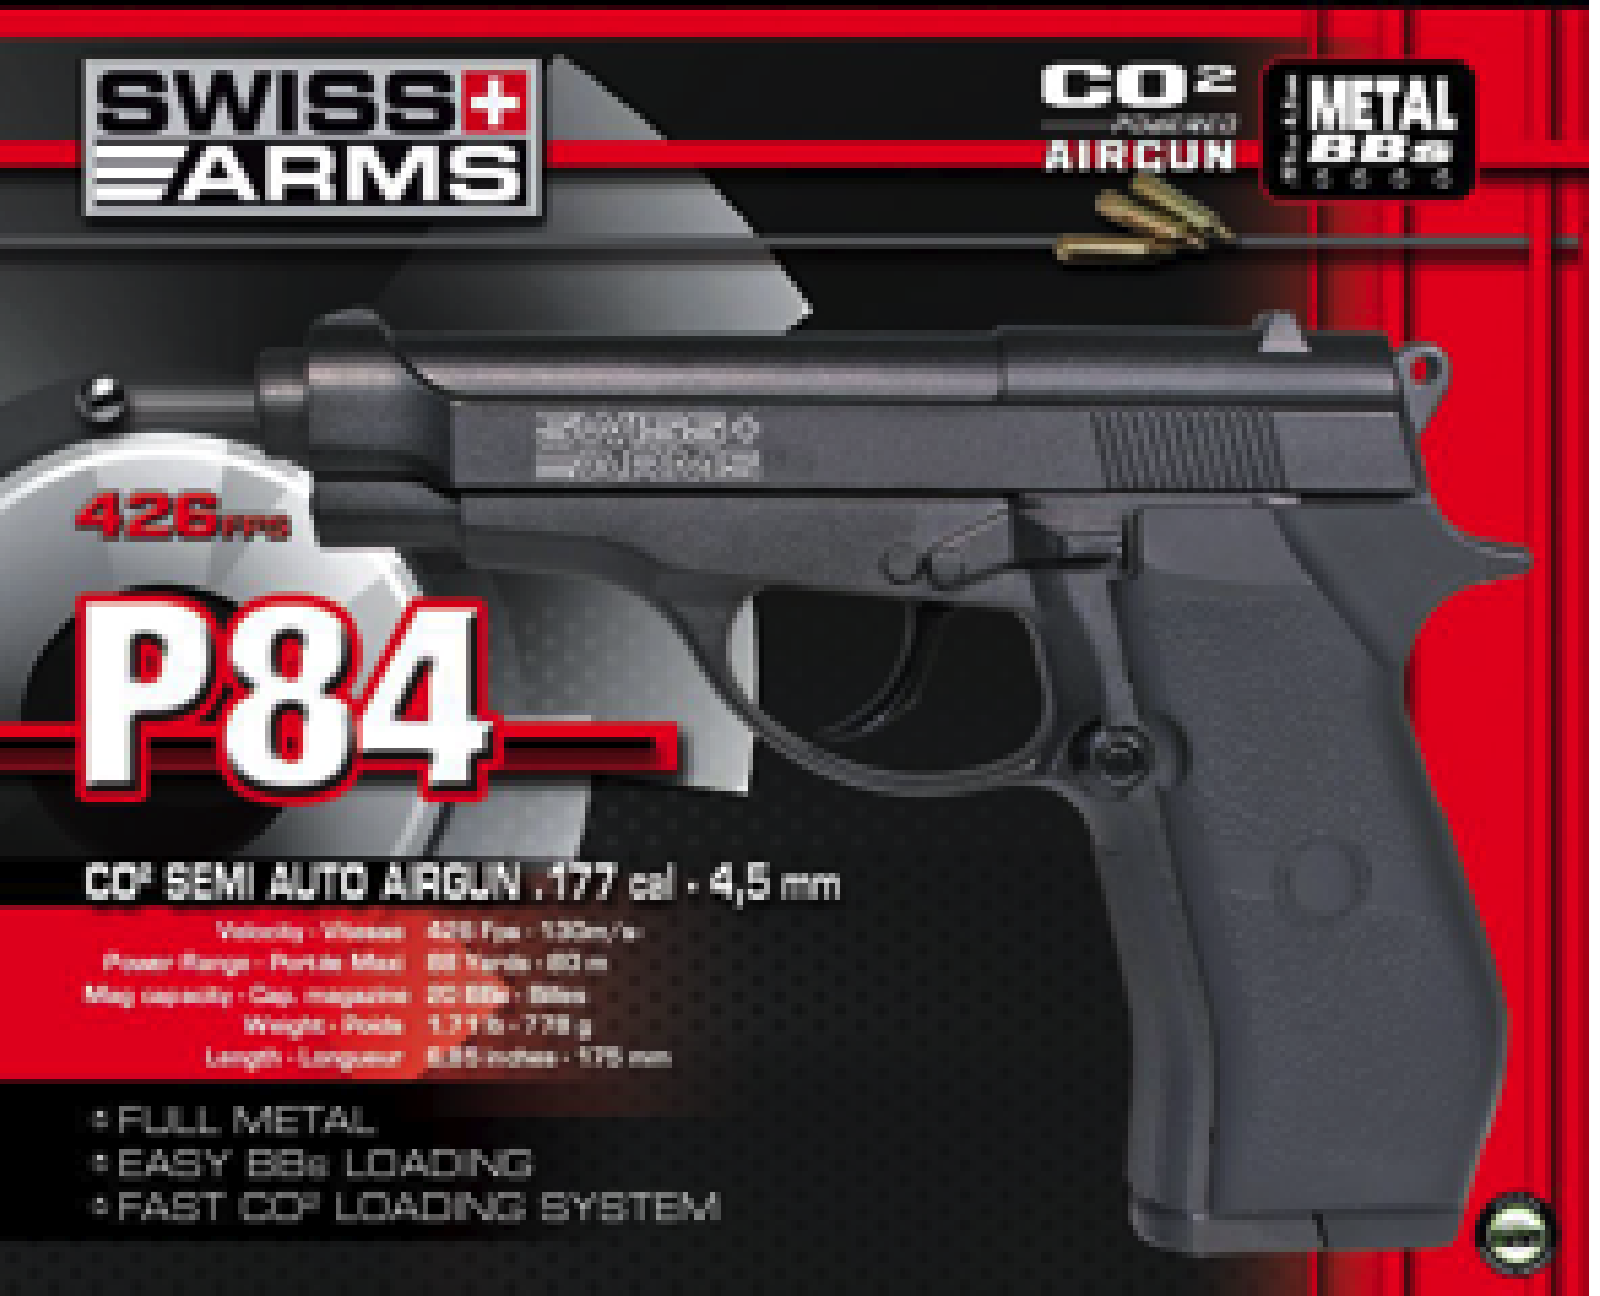 Pistola Co2 Full Metal Swiss Arms Beretta P 92 Replica + Kit